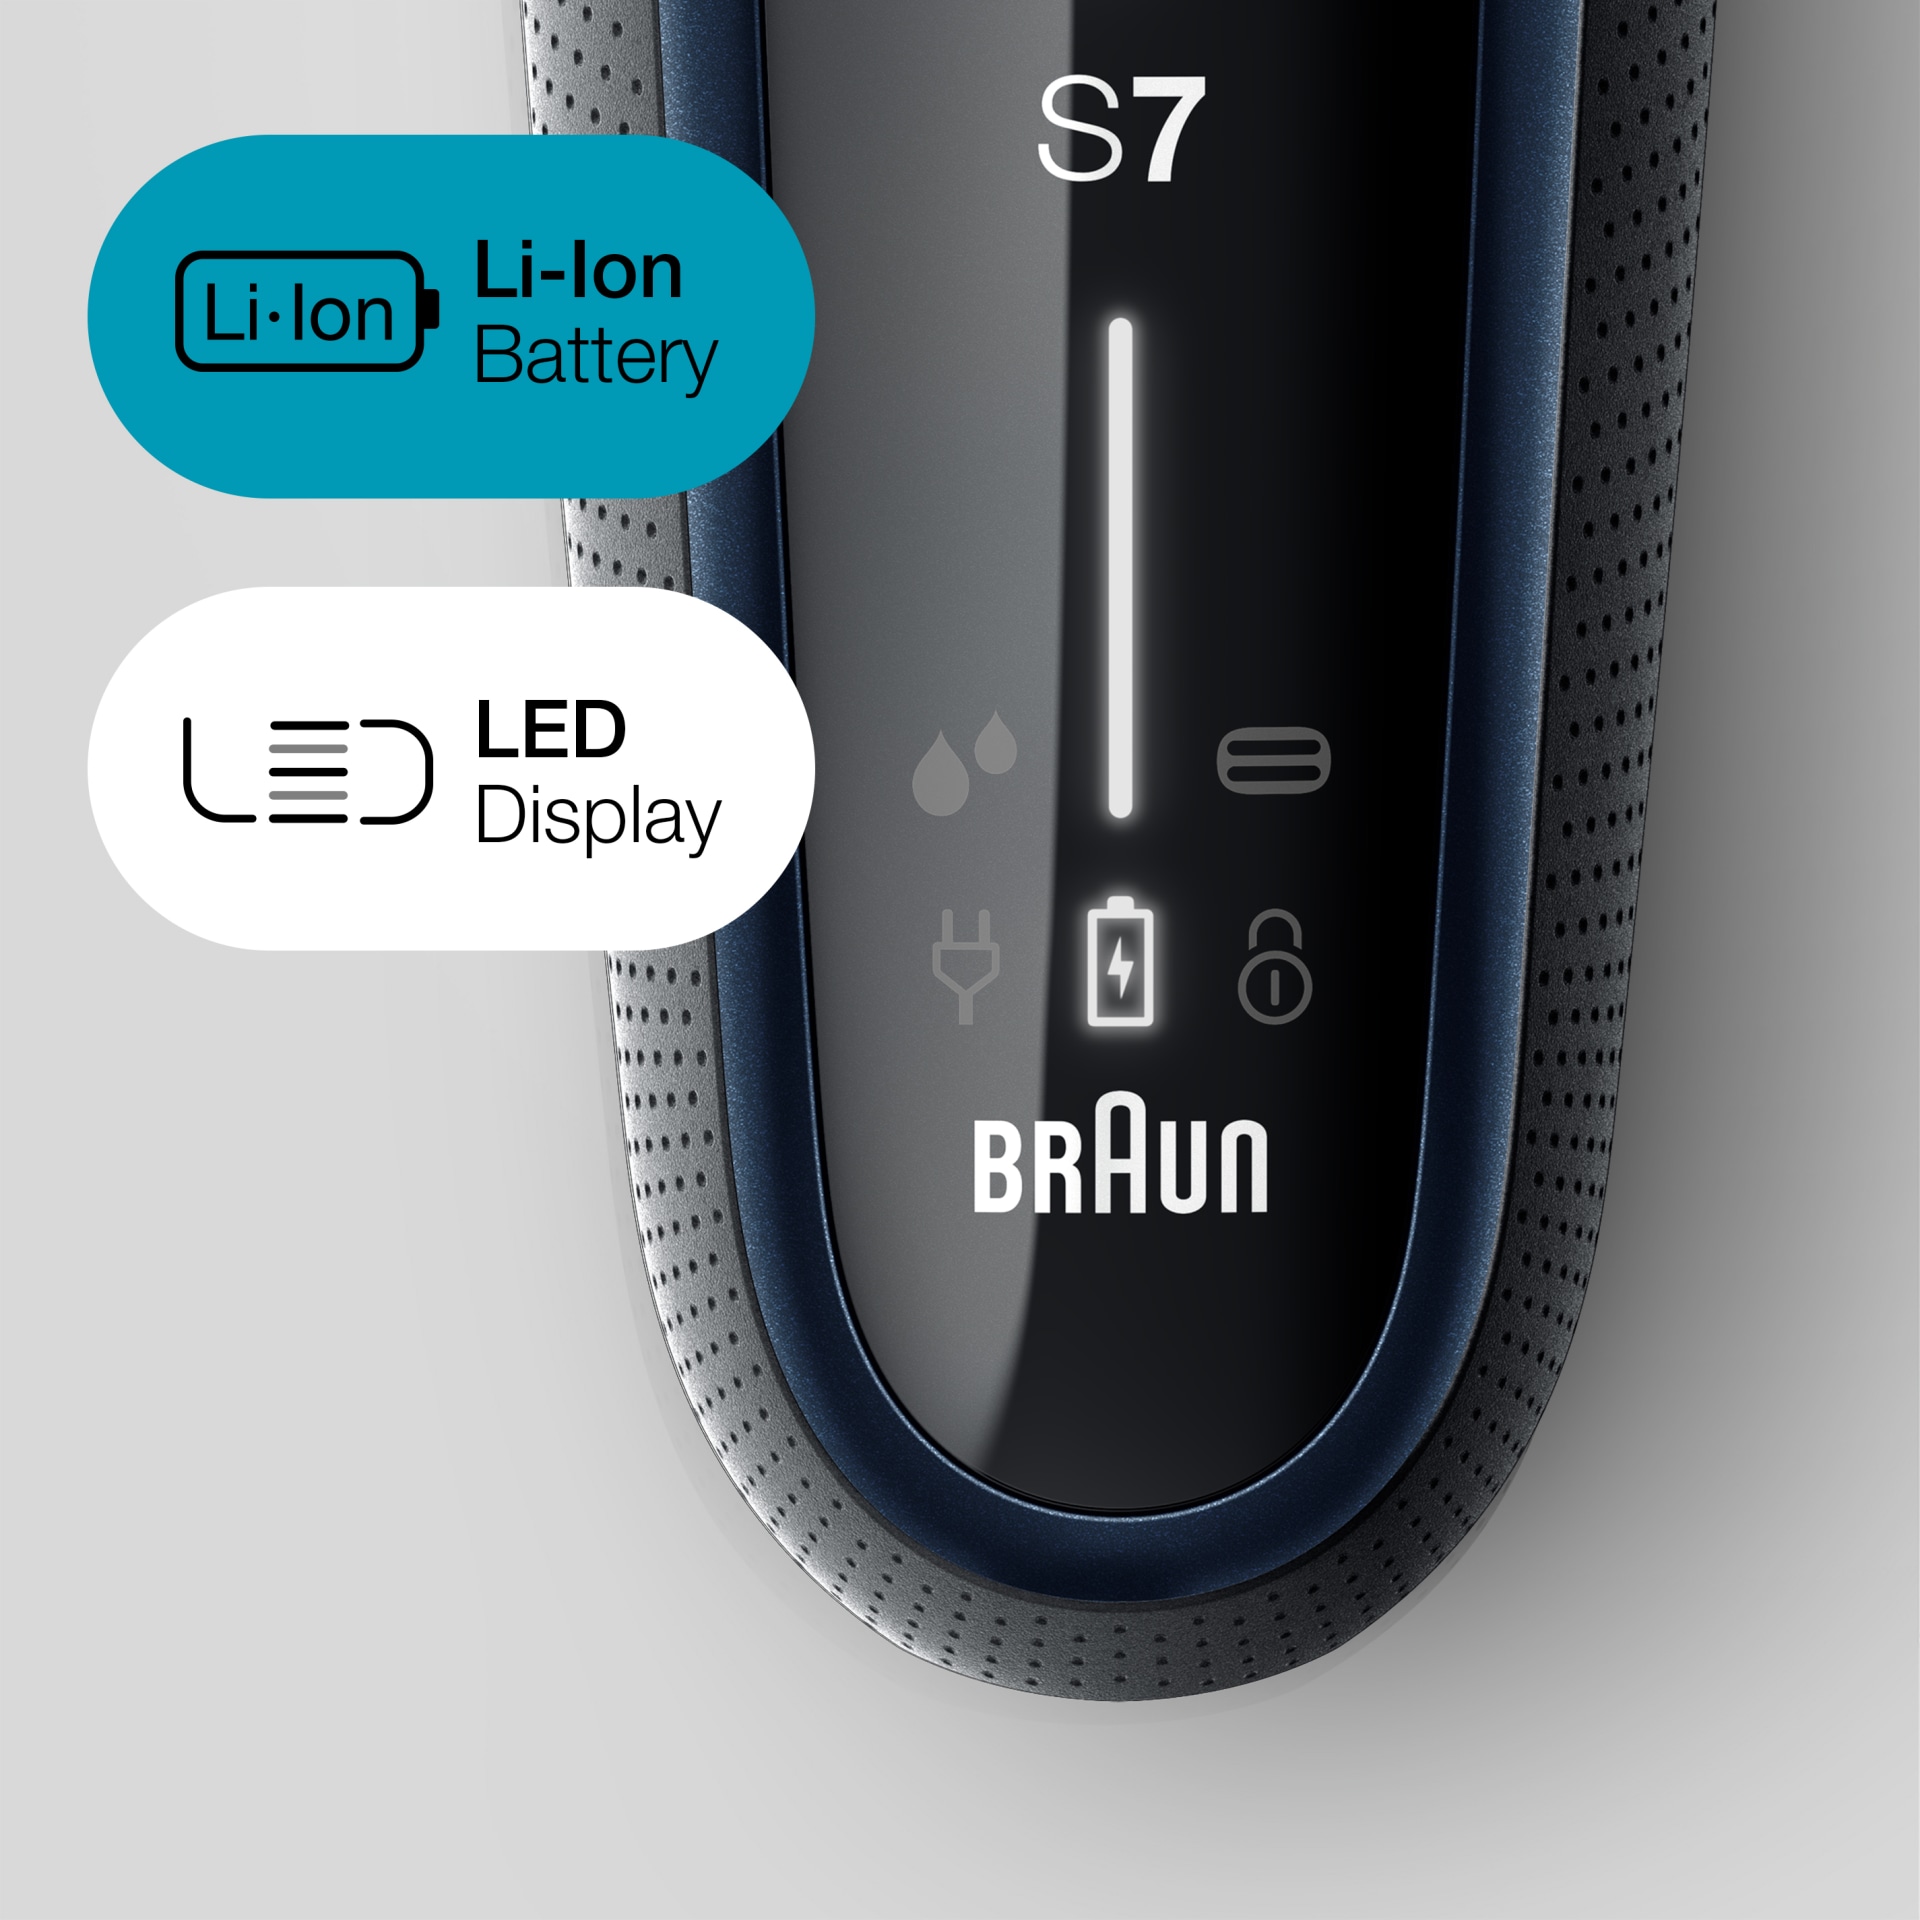 Li Ion Battery. LED display.